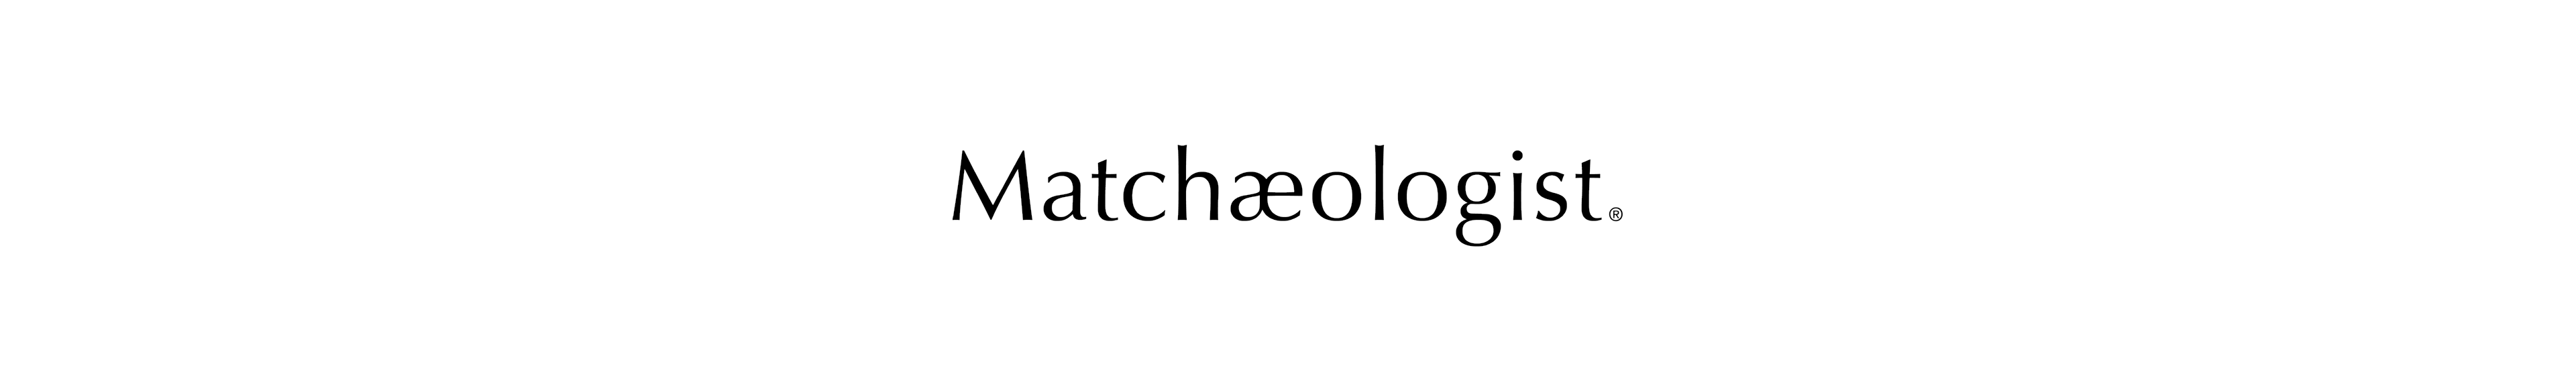 matchaeologist